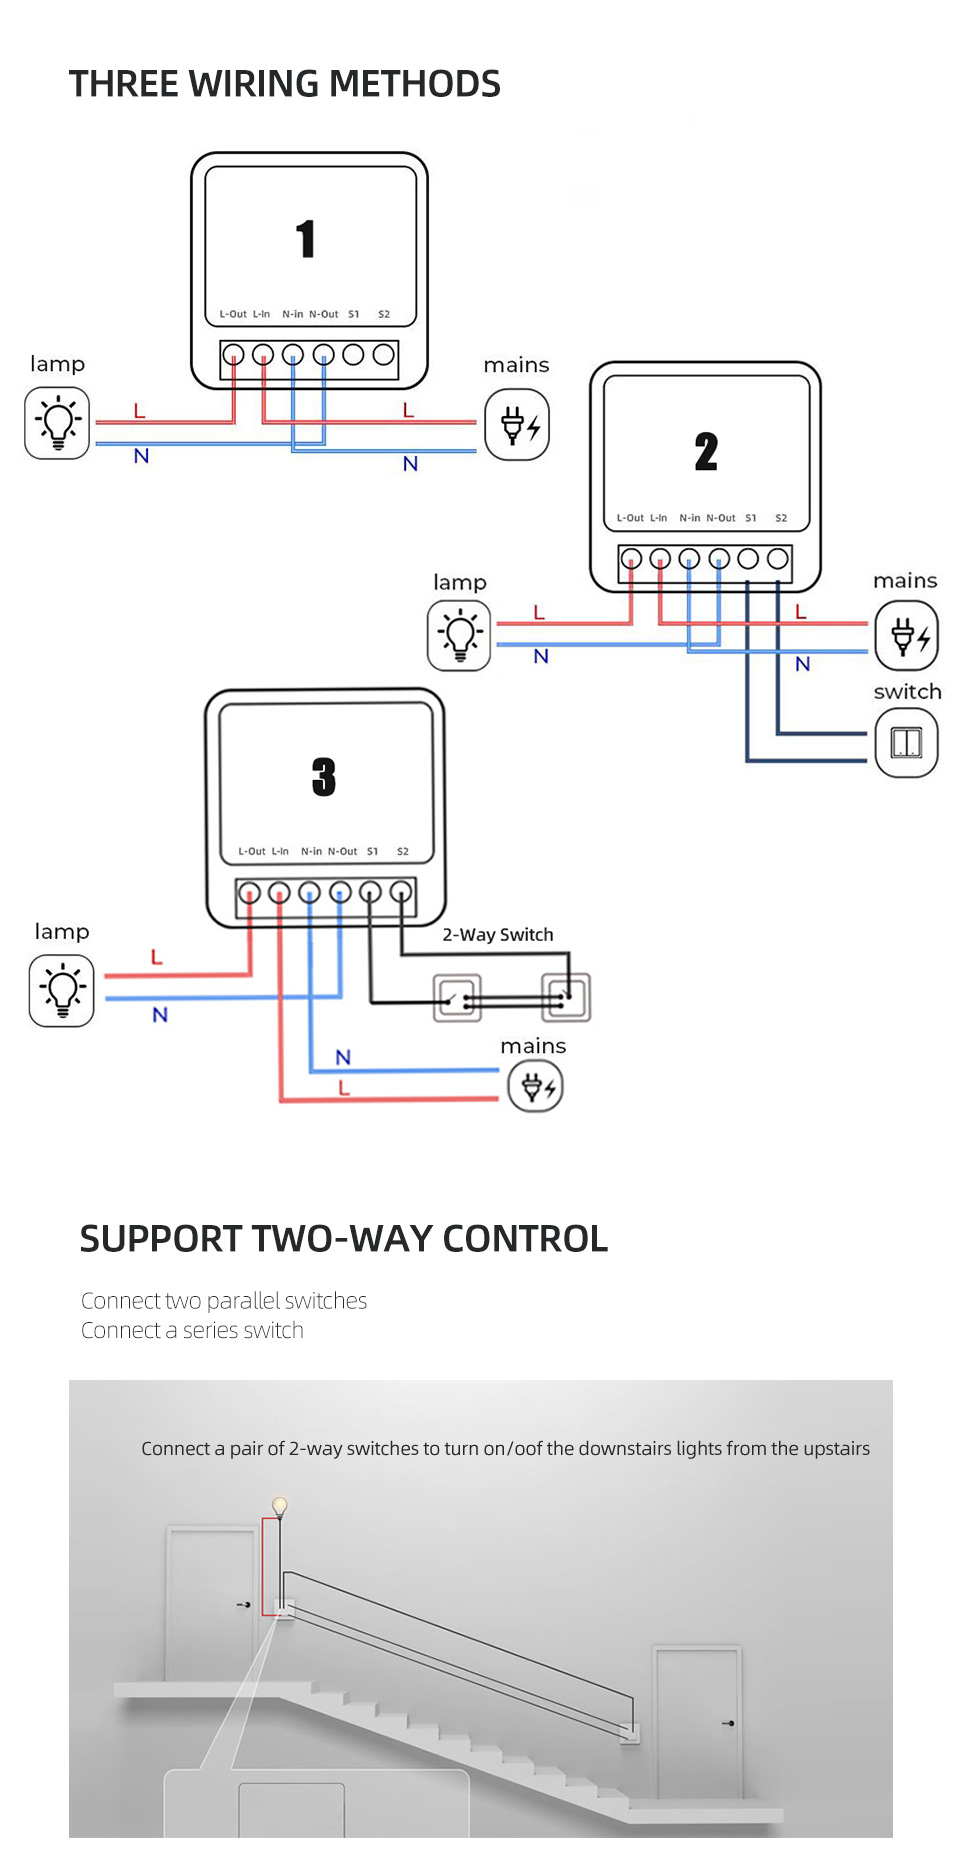 ZigBee Smart Mini Switch Module(图1)